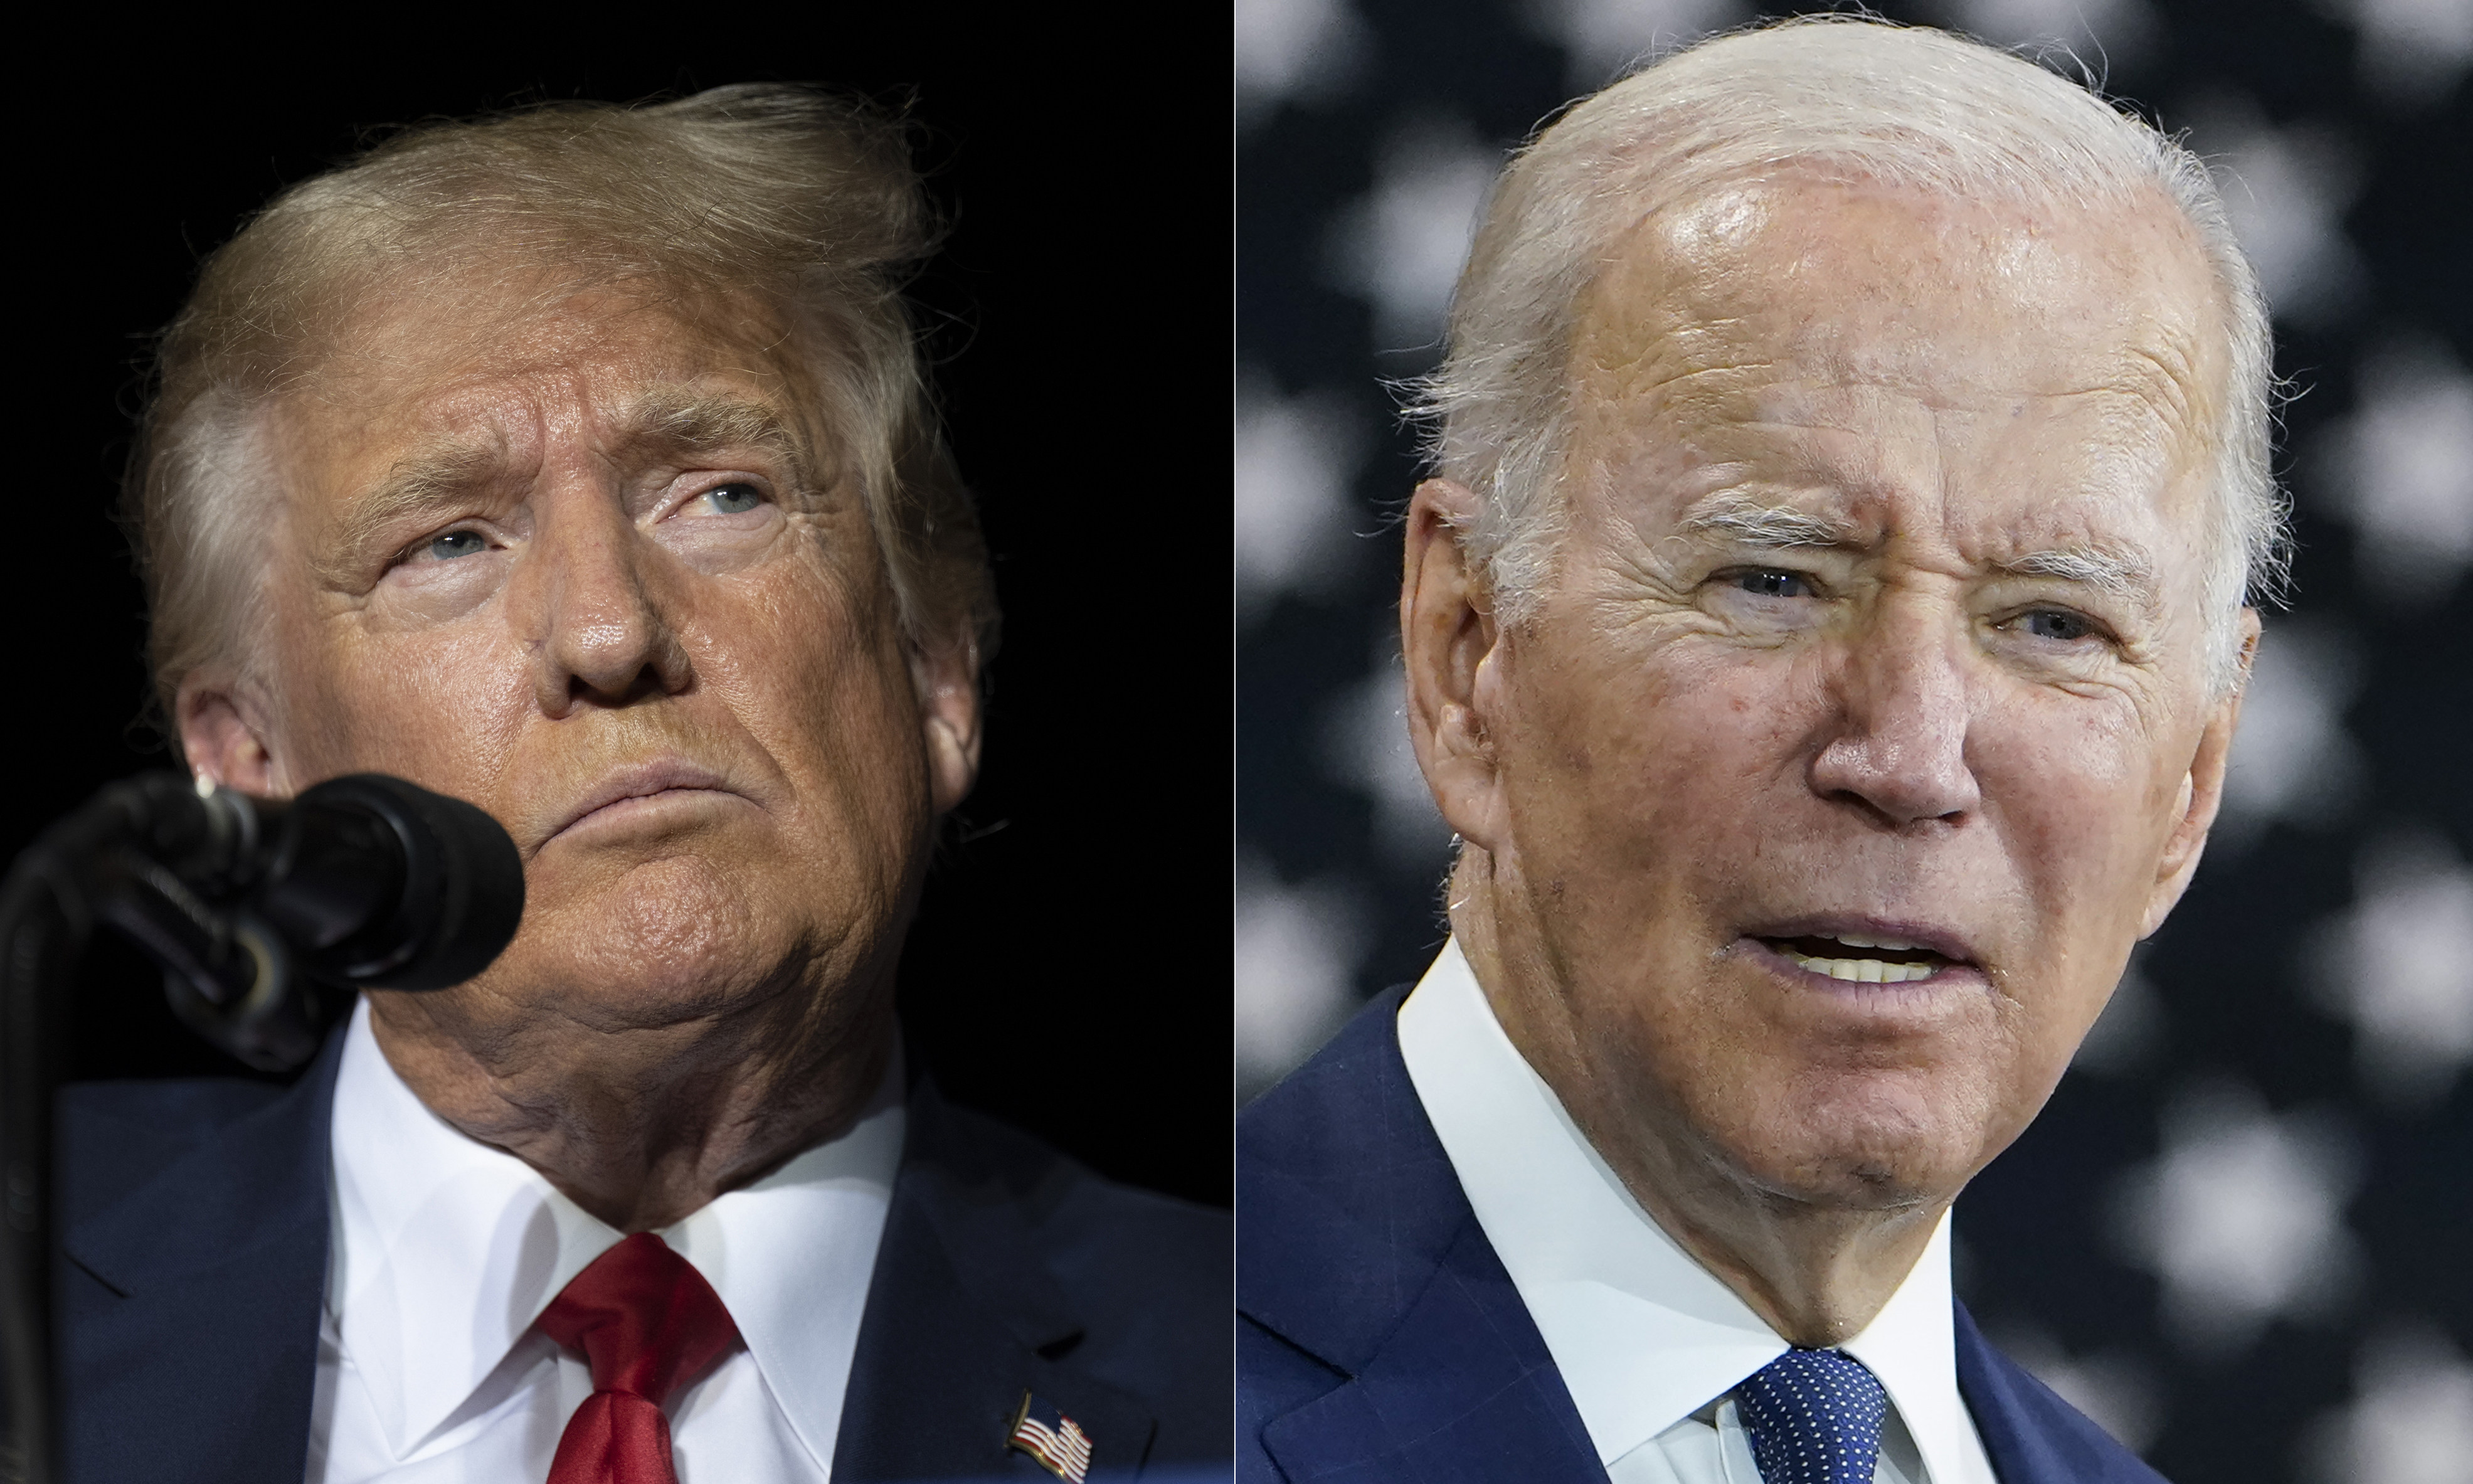 Most US national polls taken in recent months have showed a close race between Donald Trump and Joe Biden. Photo: AP